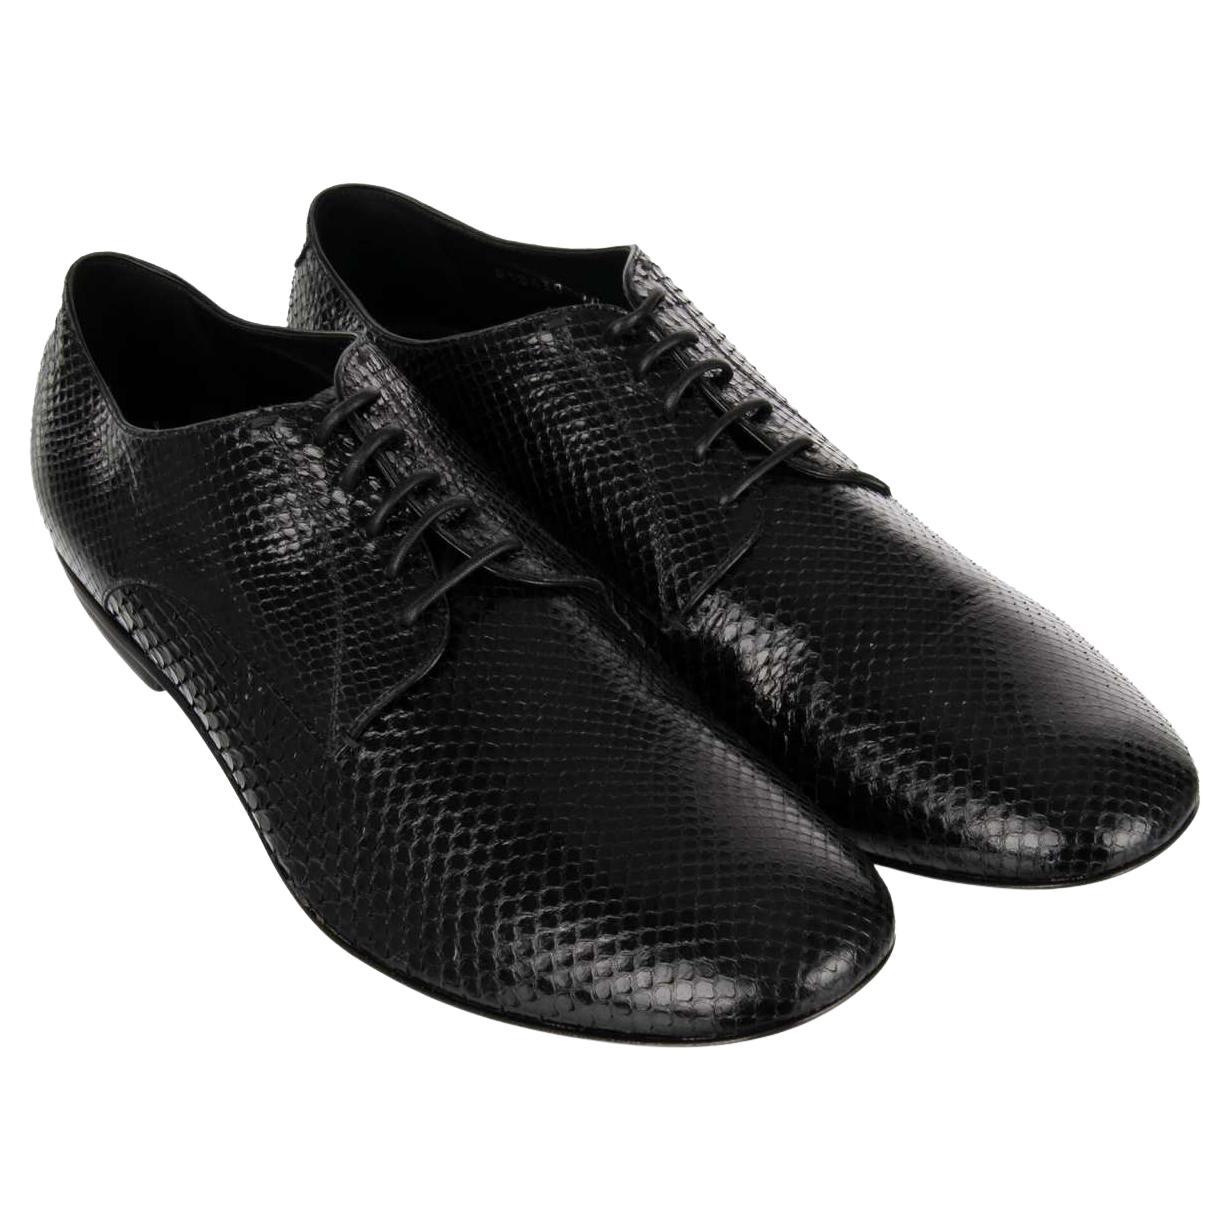 Dolce & Gabbana - Snake Derby Shoes OTELLO Black 44 UK 10 US 11 For Sale